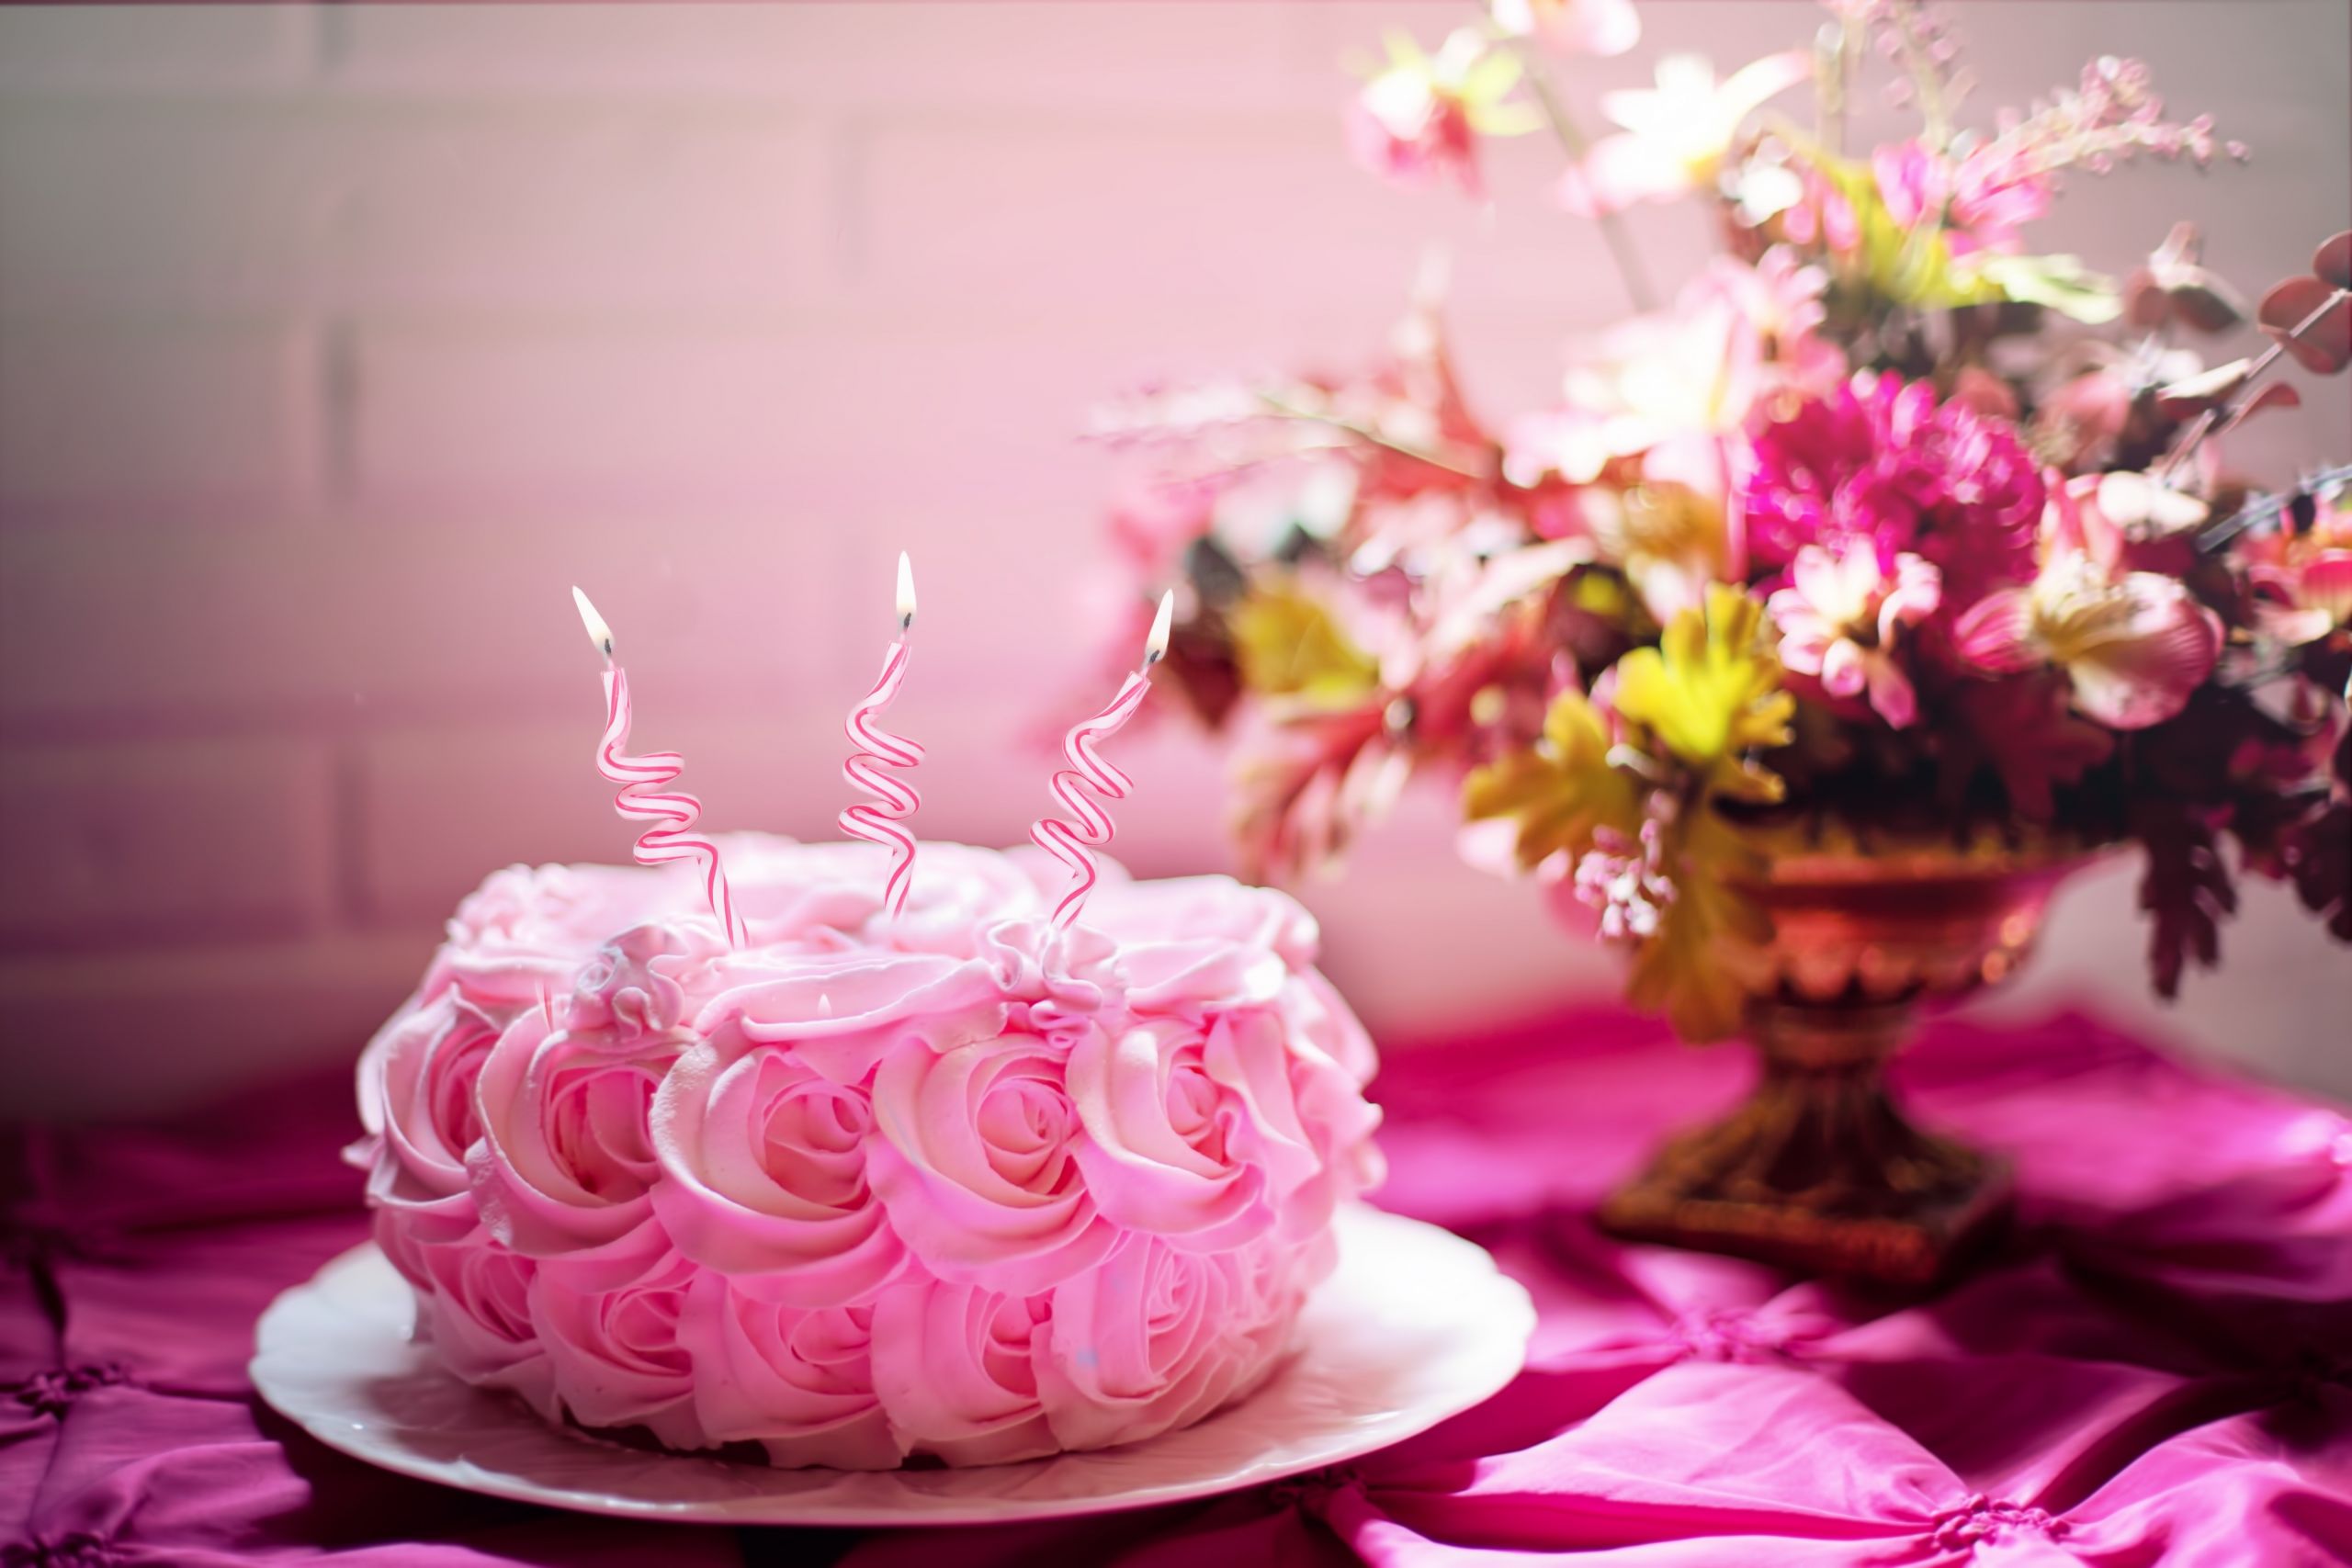 Beautiful Birthday Cake Images
 500 Amazing Birthday Cake s · Pexels · Free Stock s